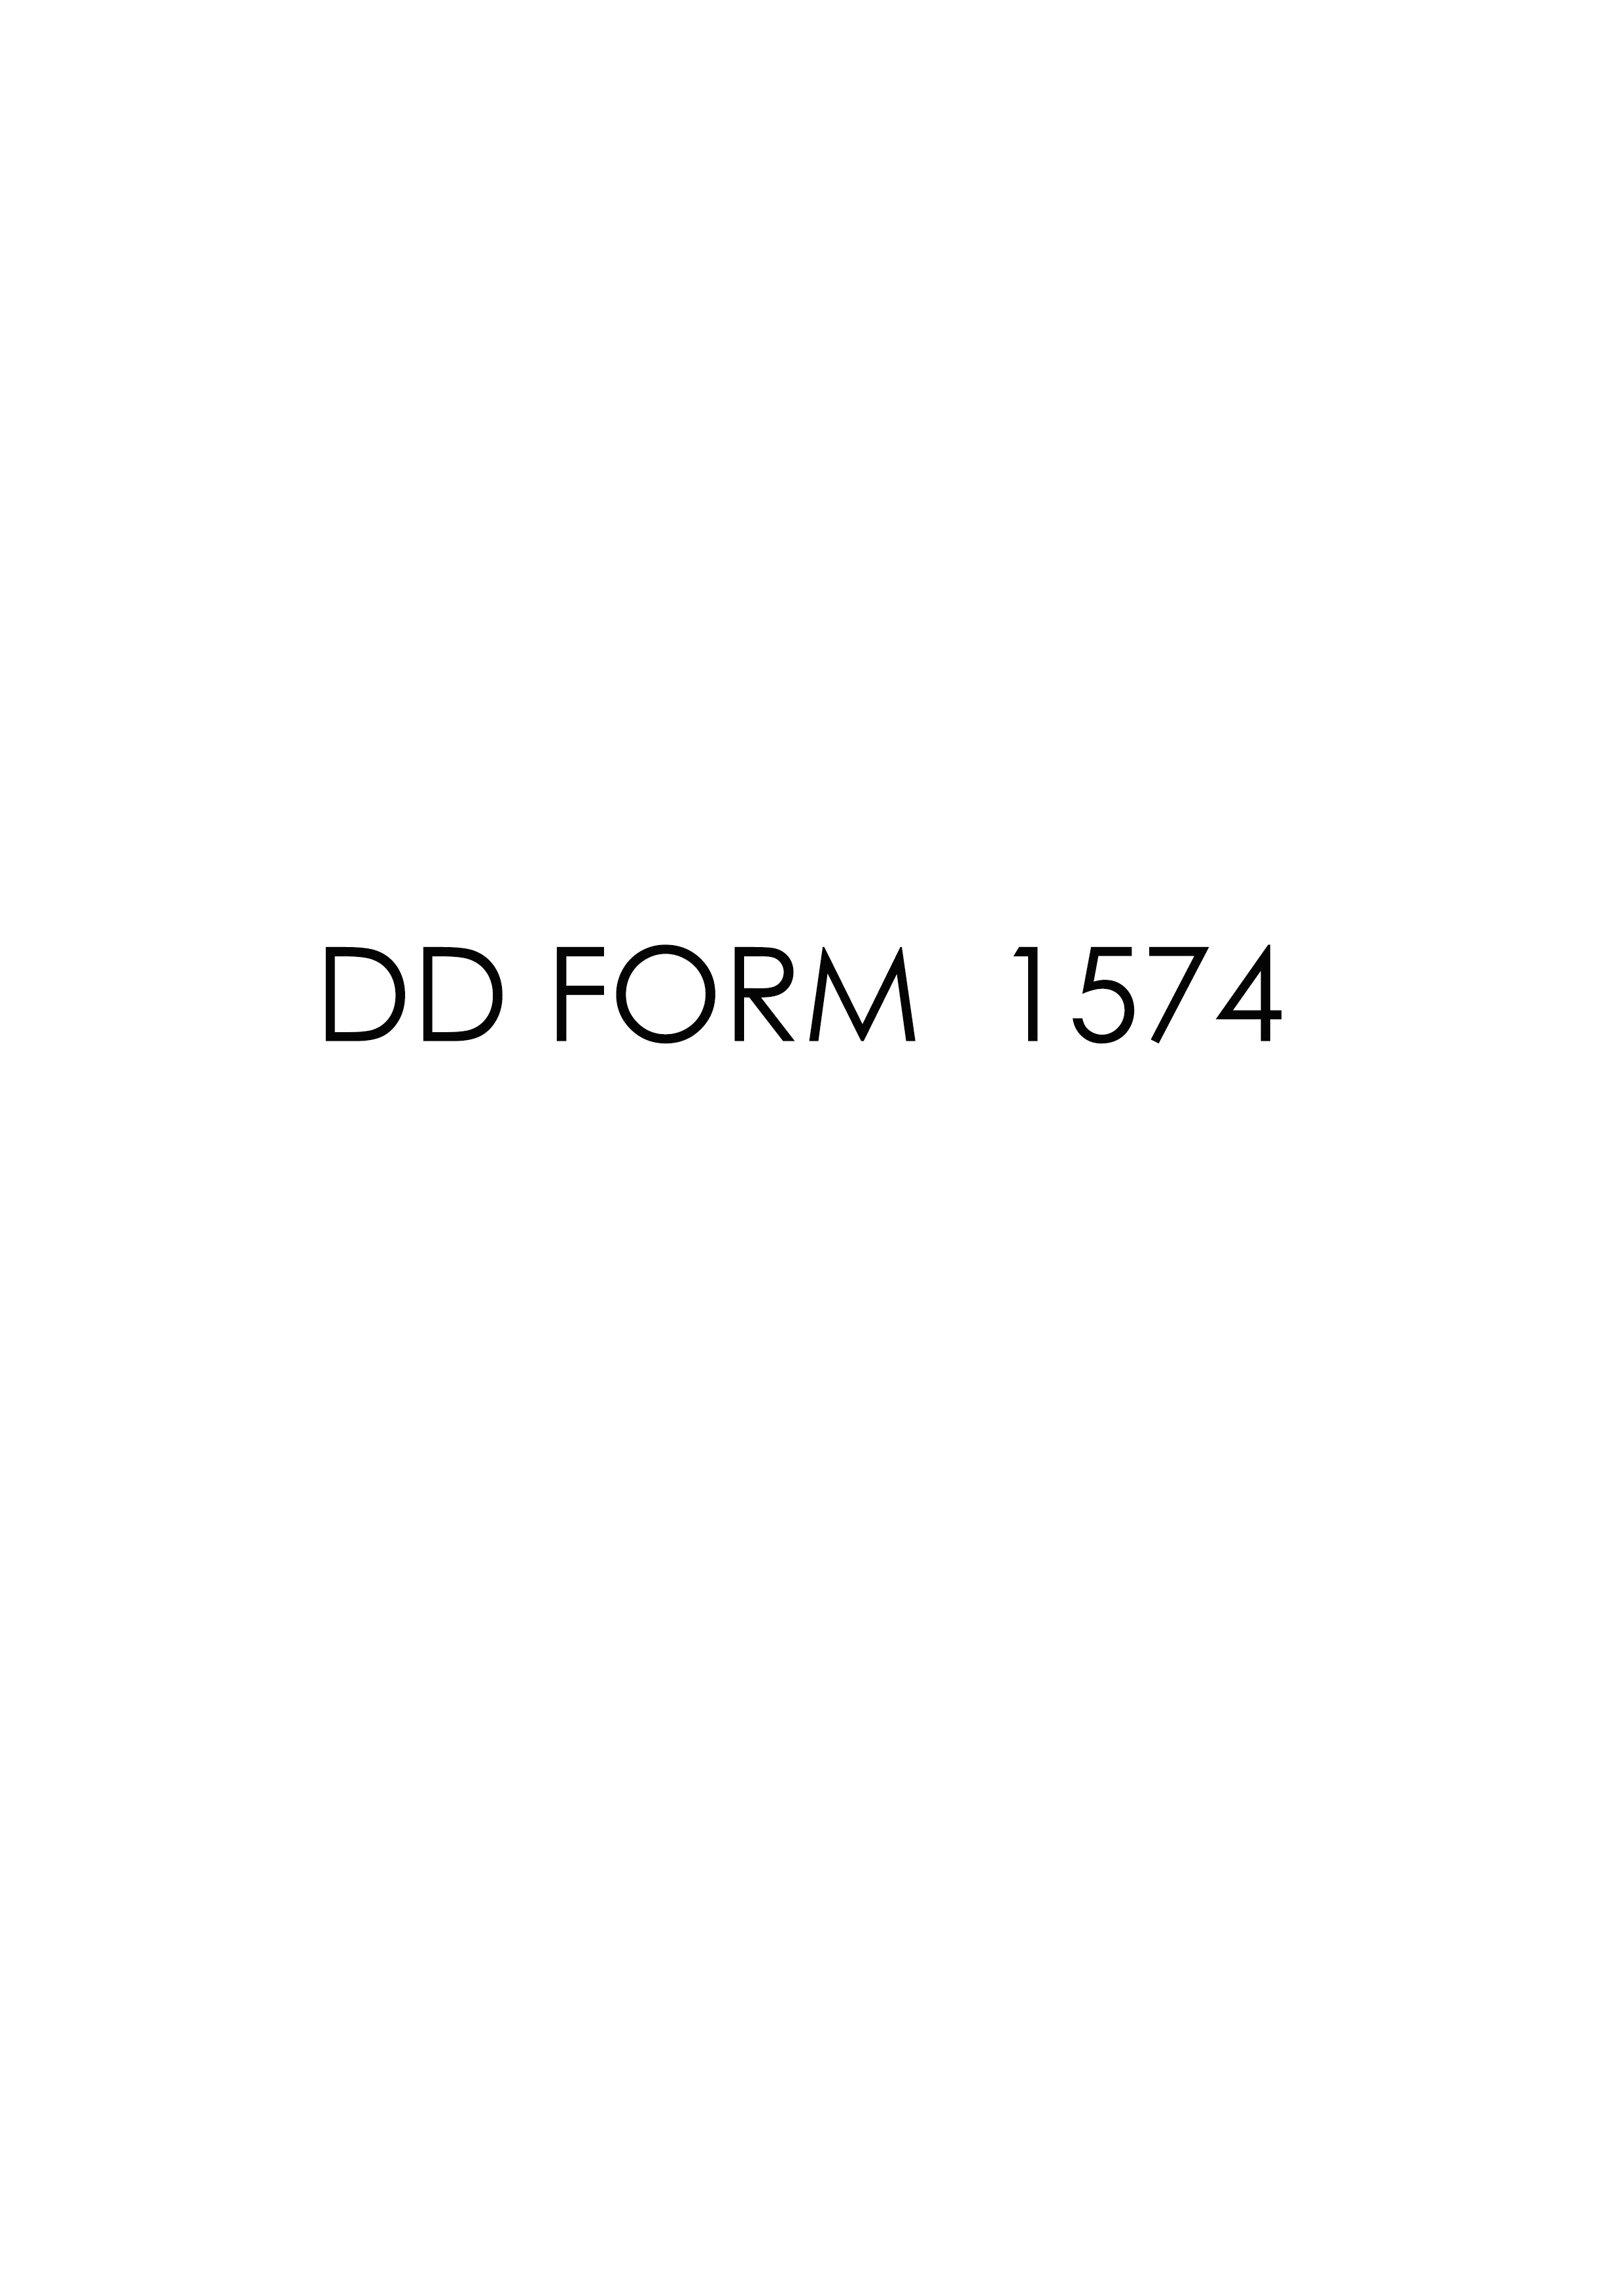 Download dd form 1574